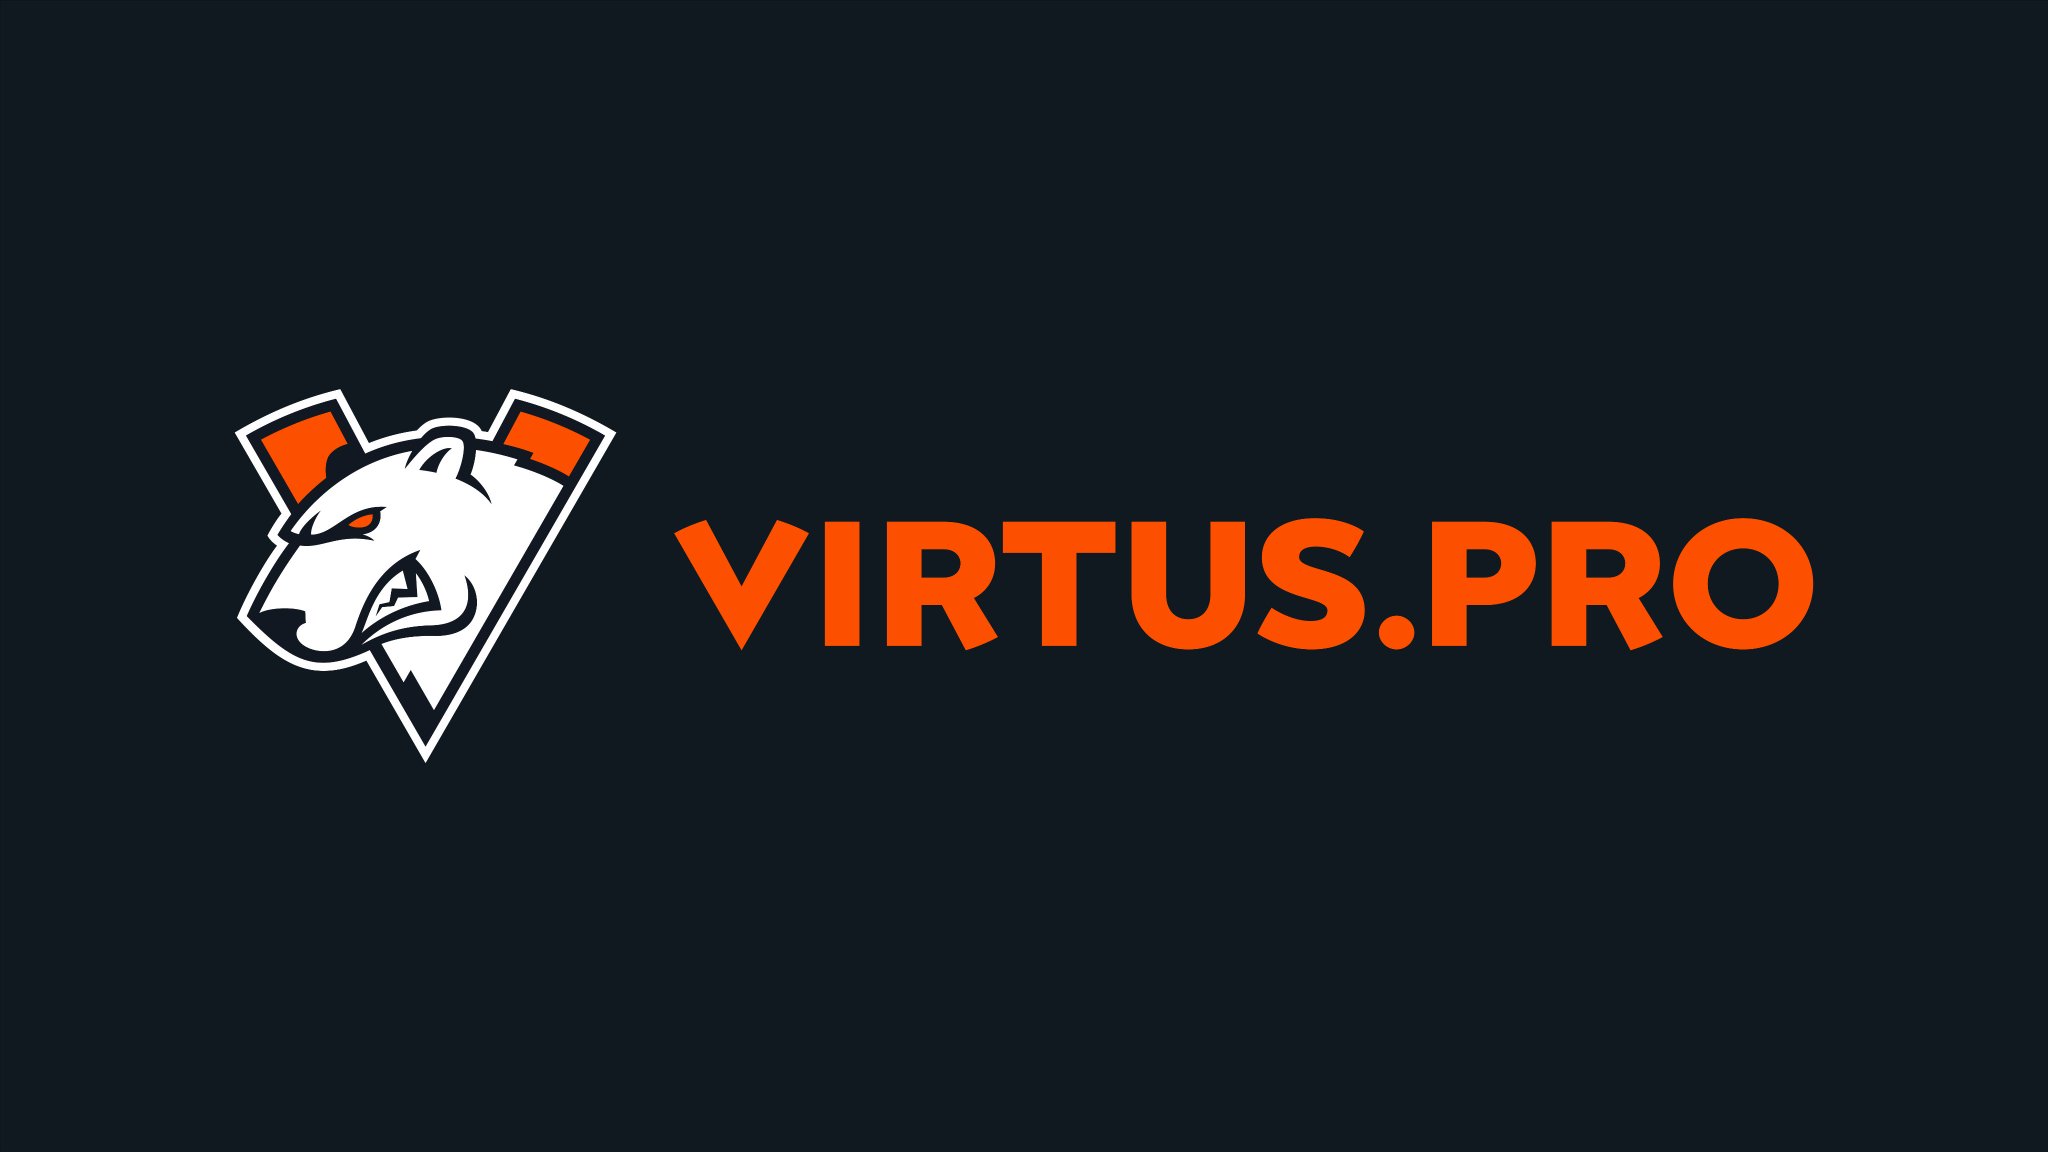 Pro On Twitter - New Virtus Pro Logo , HD Wallpaper & Backgrounds